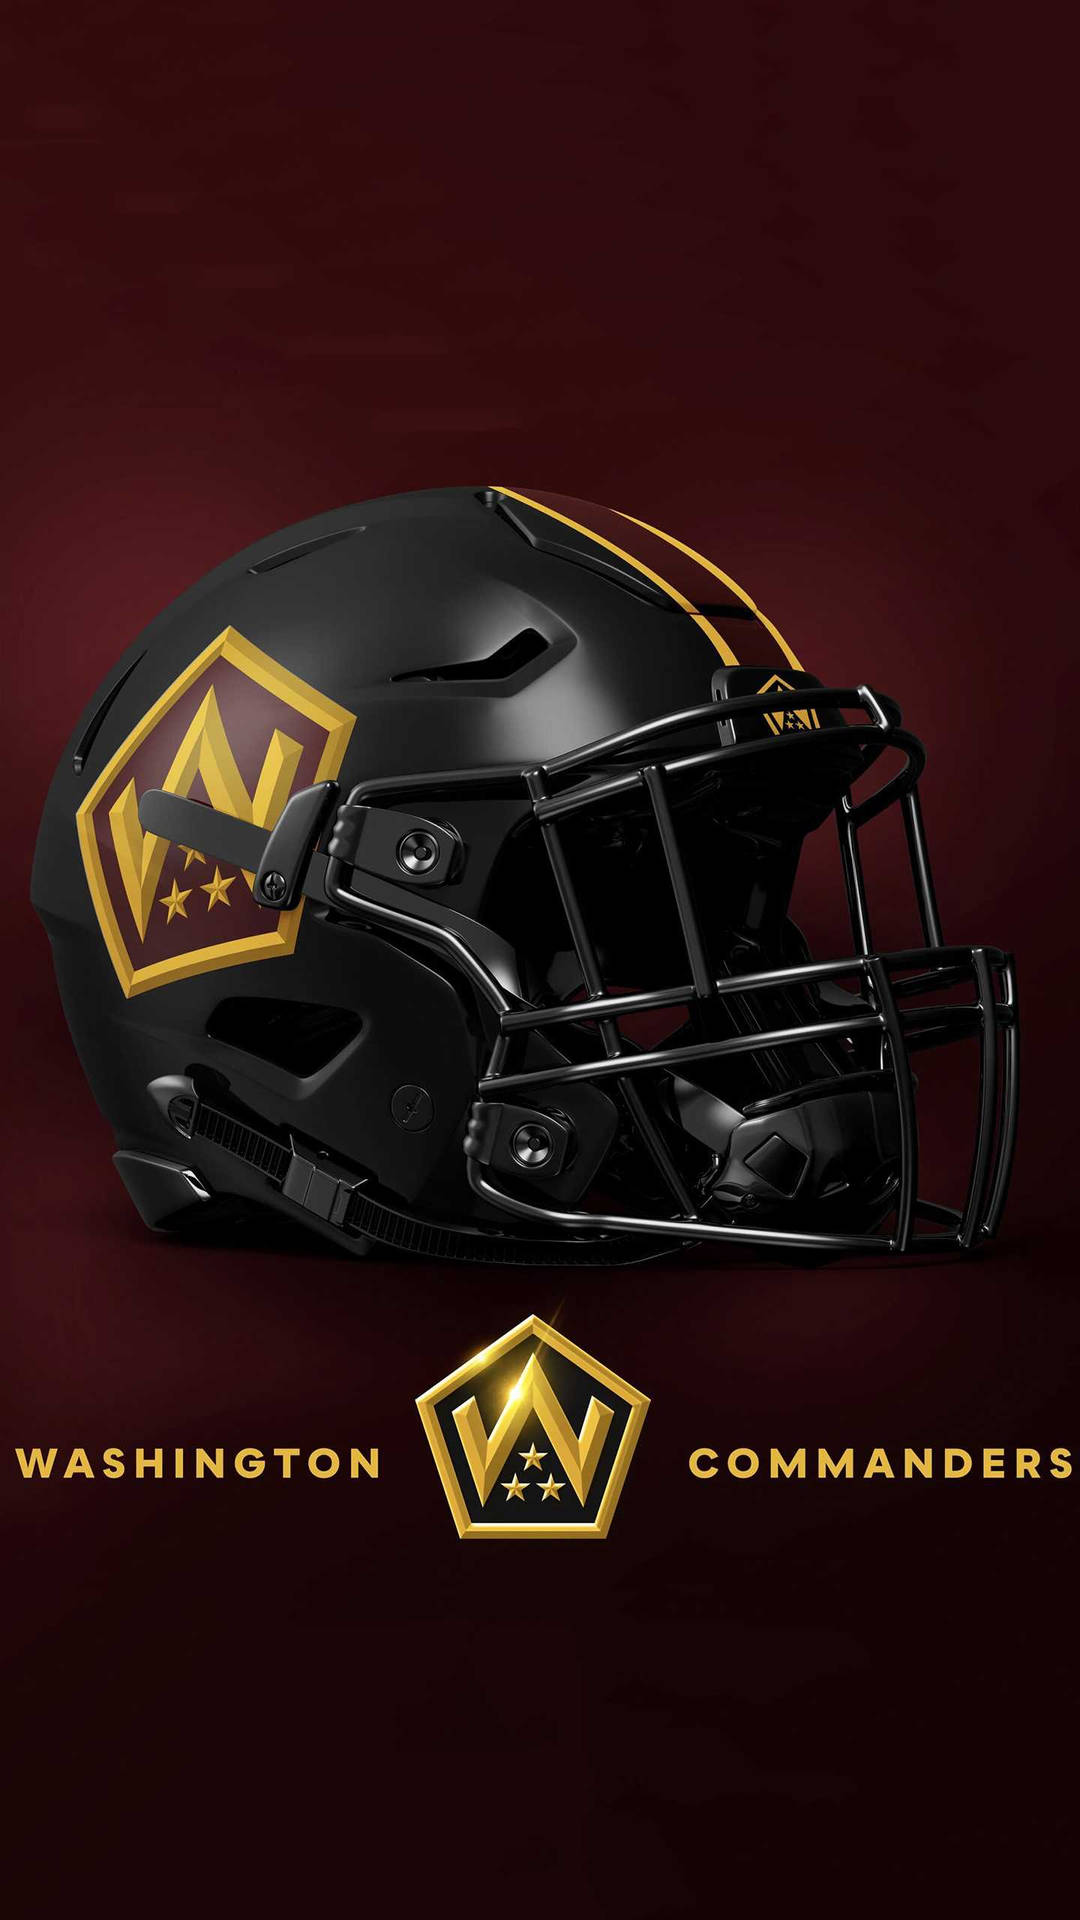 Download Washington Commanders Football Helmet Wallpaper